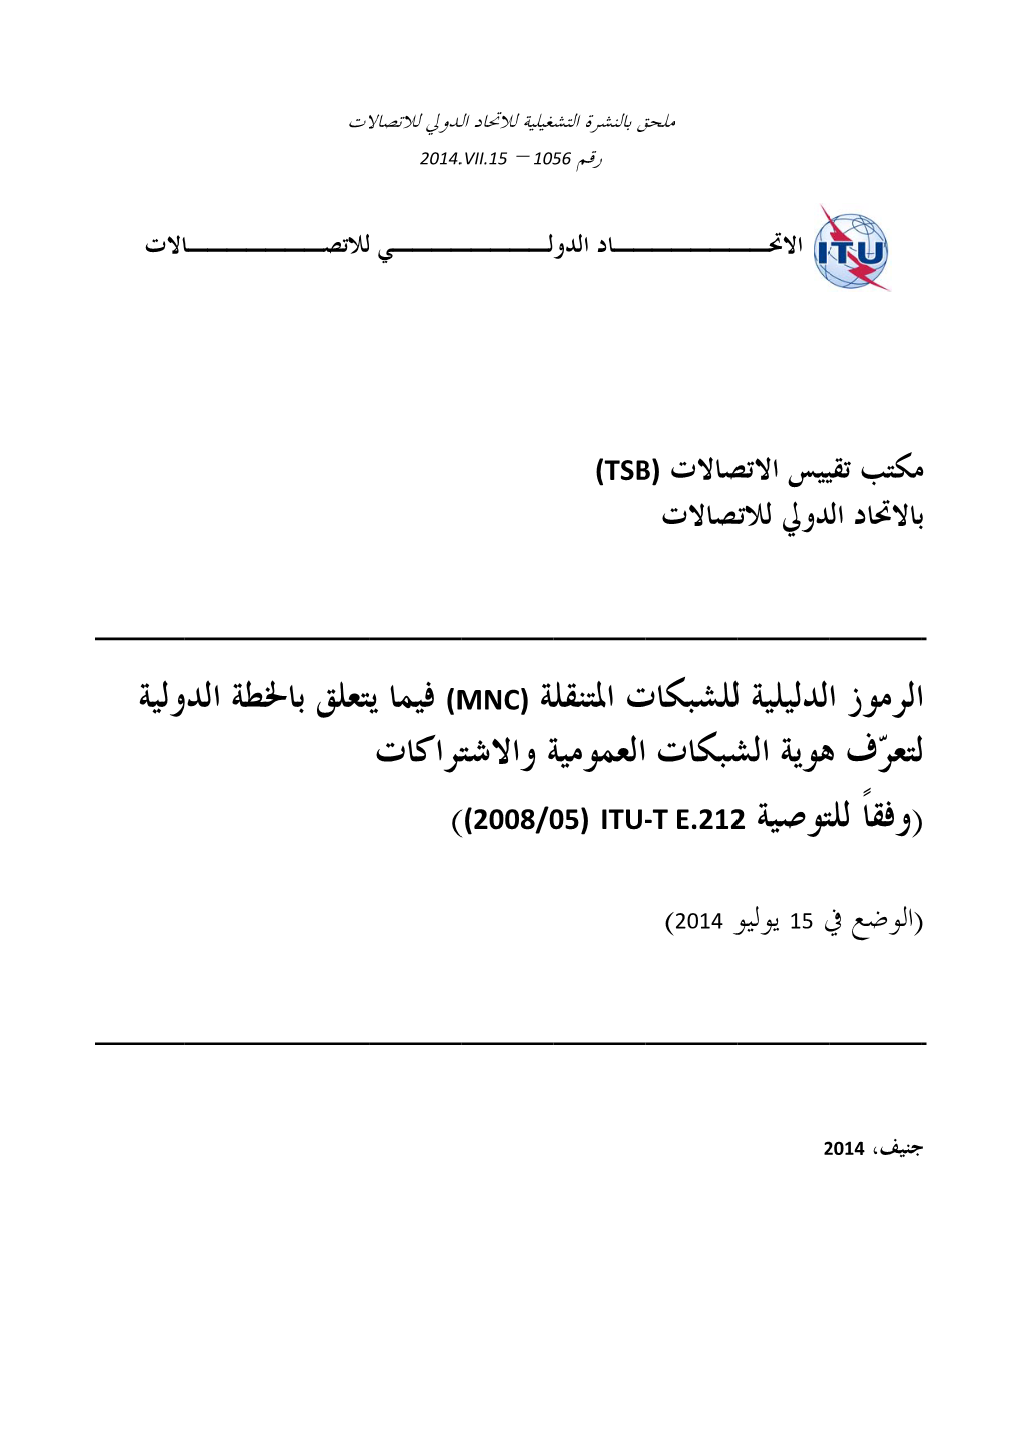 ITU Document